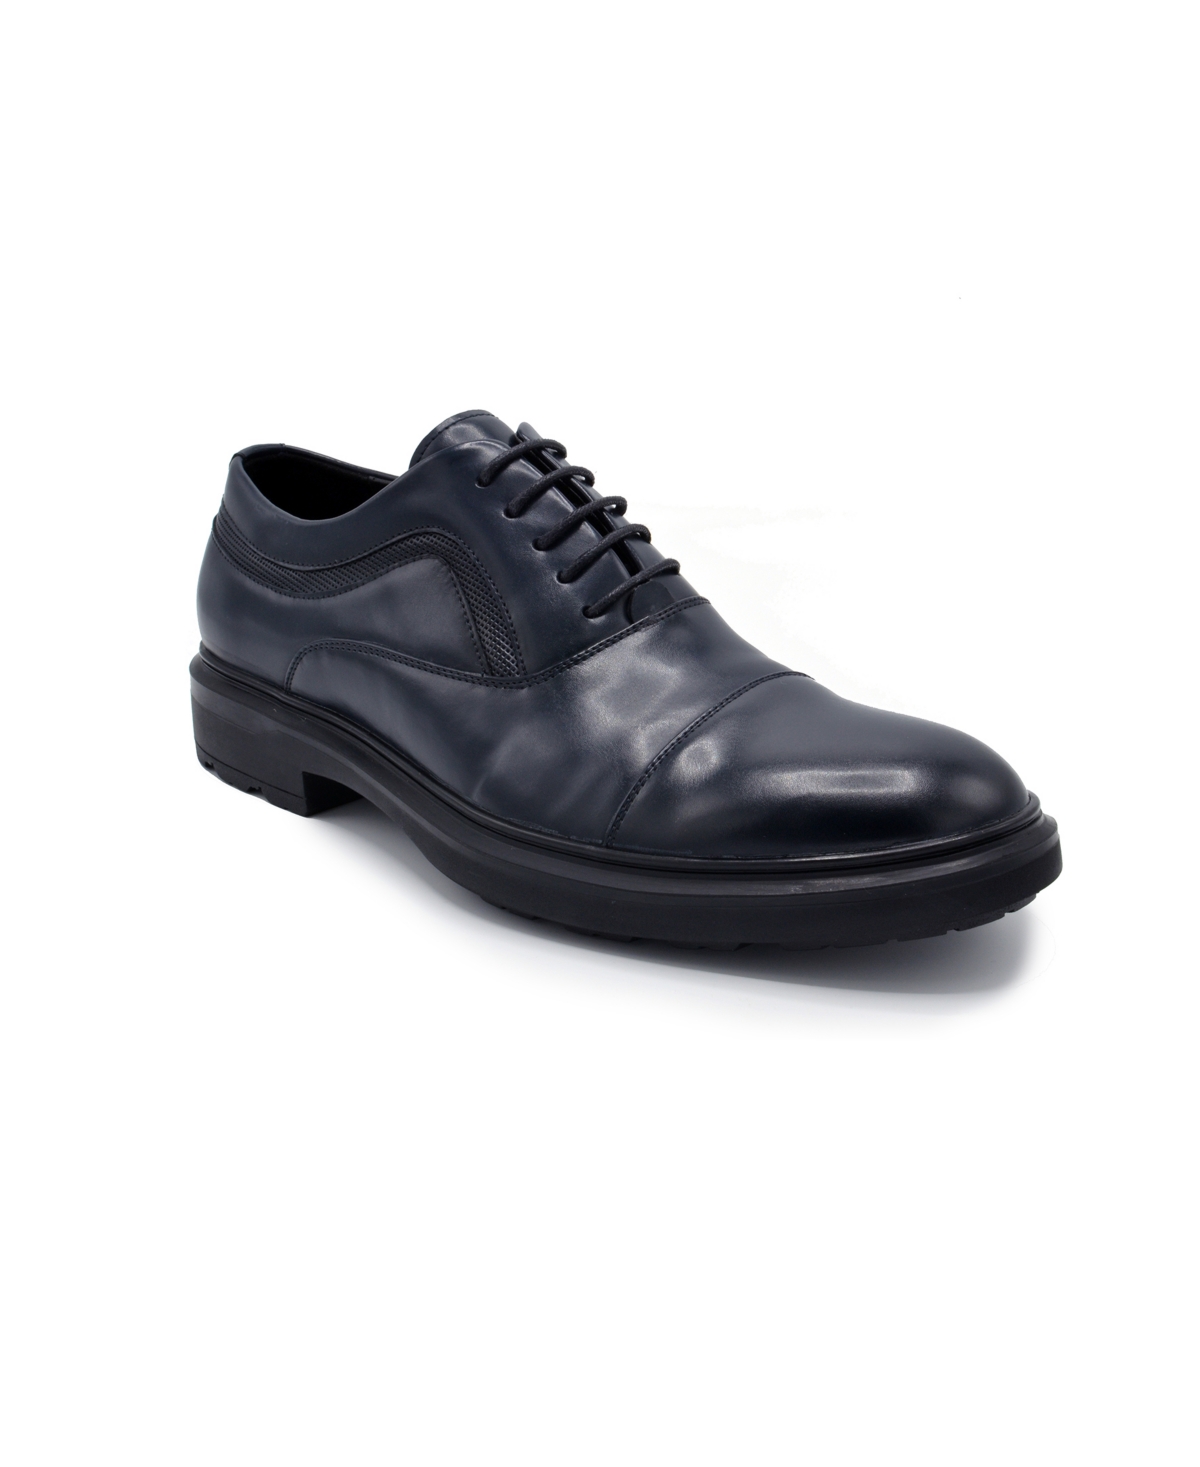 Men's Tuscan Cap Toe Dress Shoes - Navy